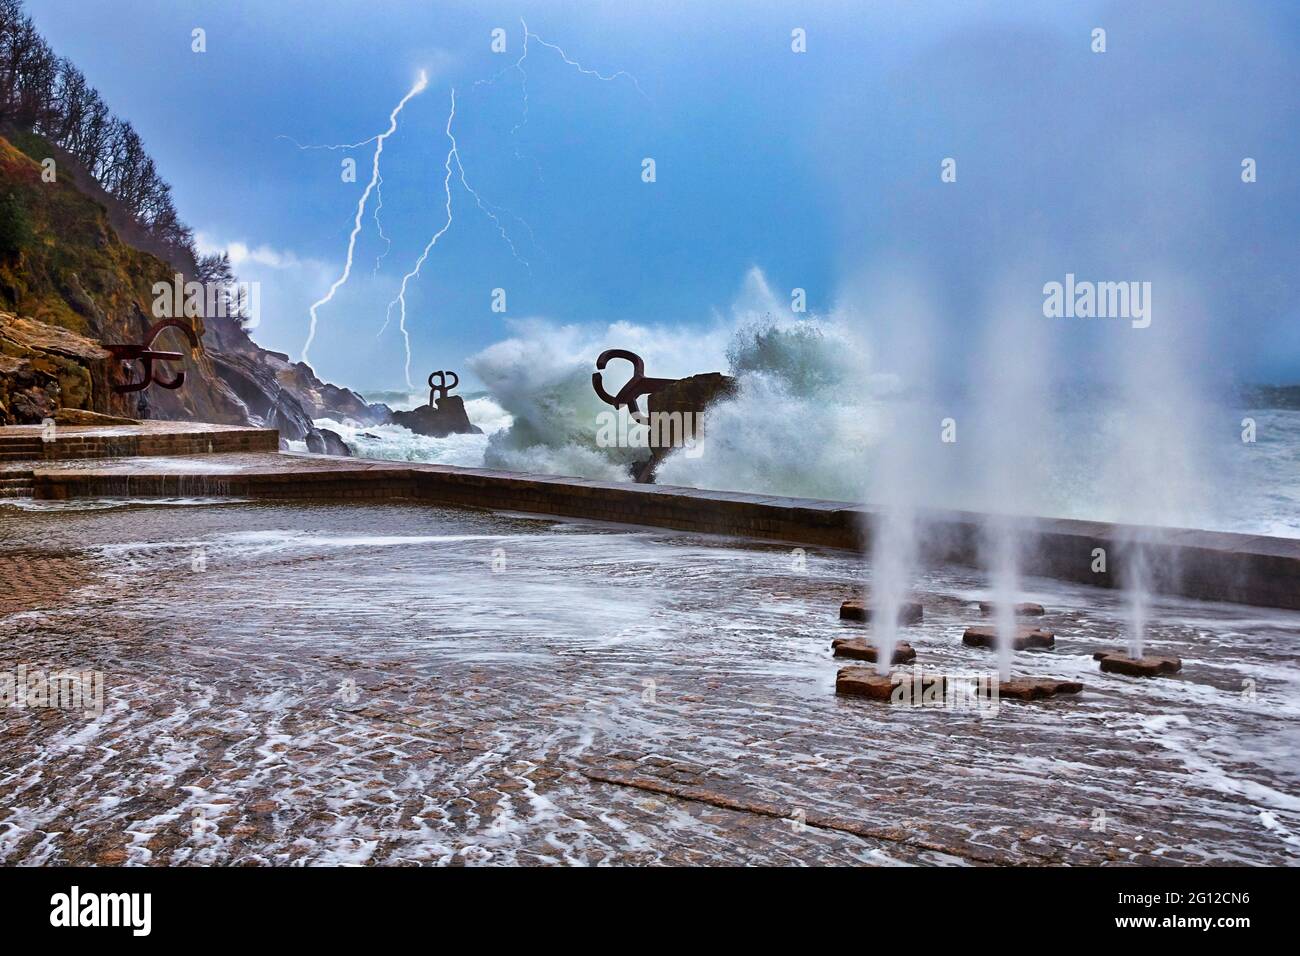 Tormenta con olas de 7 metros sobre la costa vasca, alerta naranja en la costa cántabra, Peine del Viento, Escultura de Eduardo Chillida Donostia, San Foto de stock